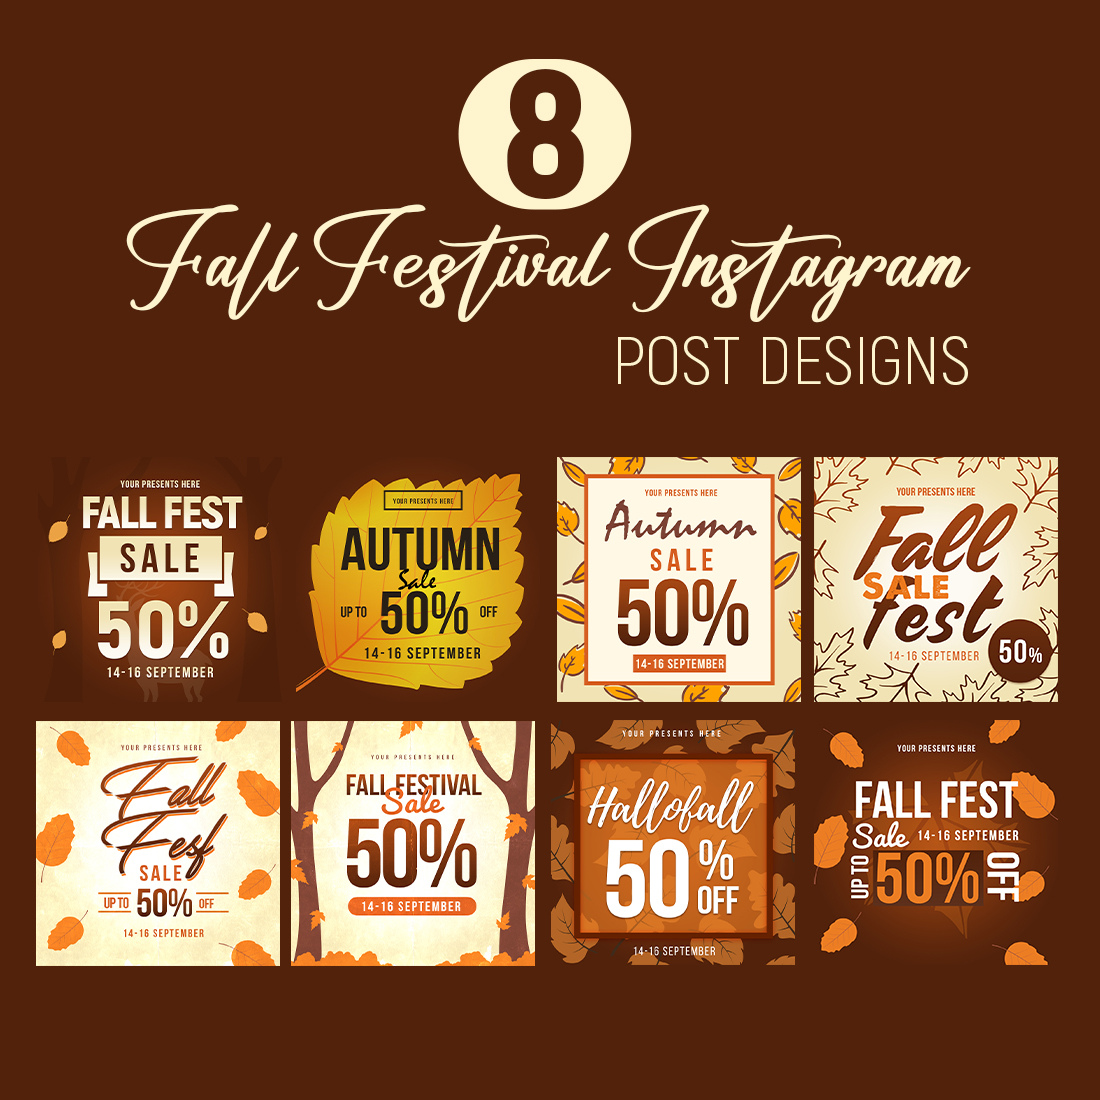 8 Fall Festival Instagram Post Design preview image.